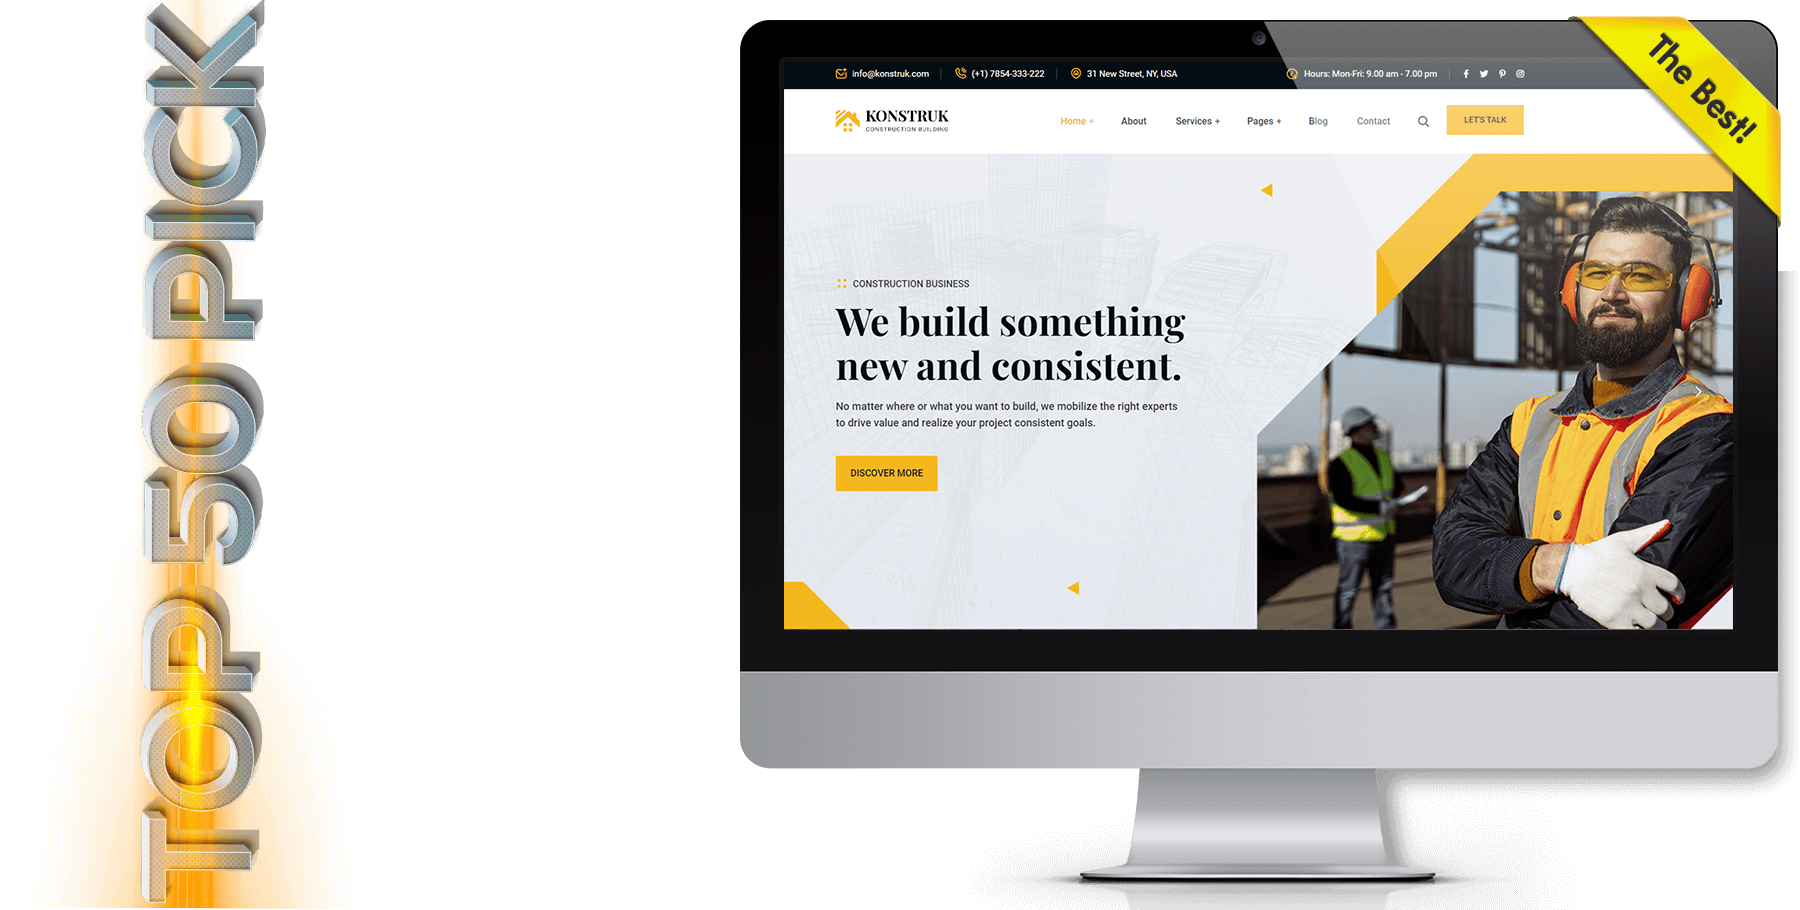 A website design in construction named Bygge